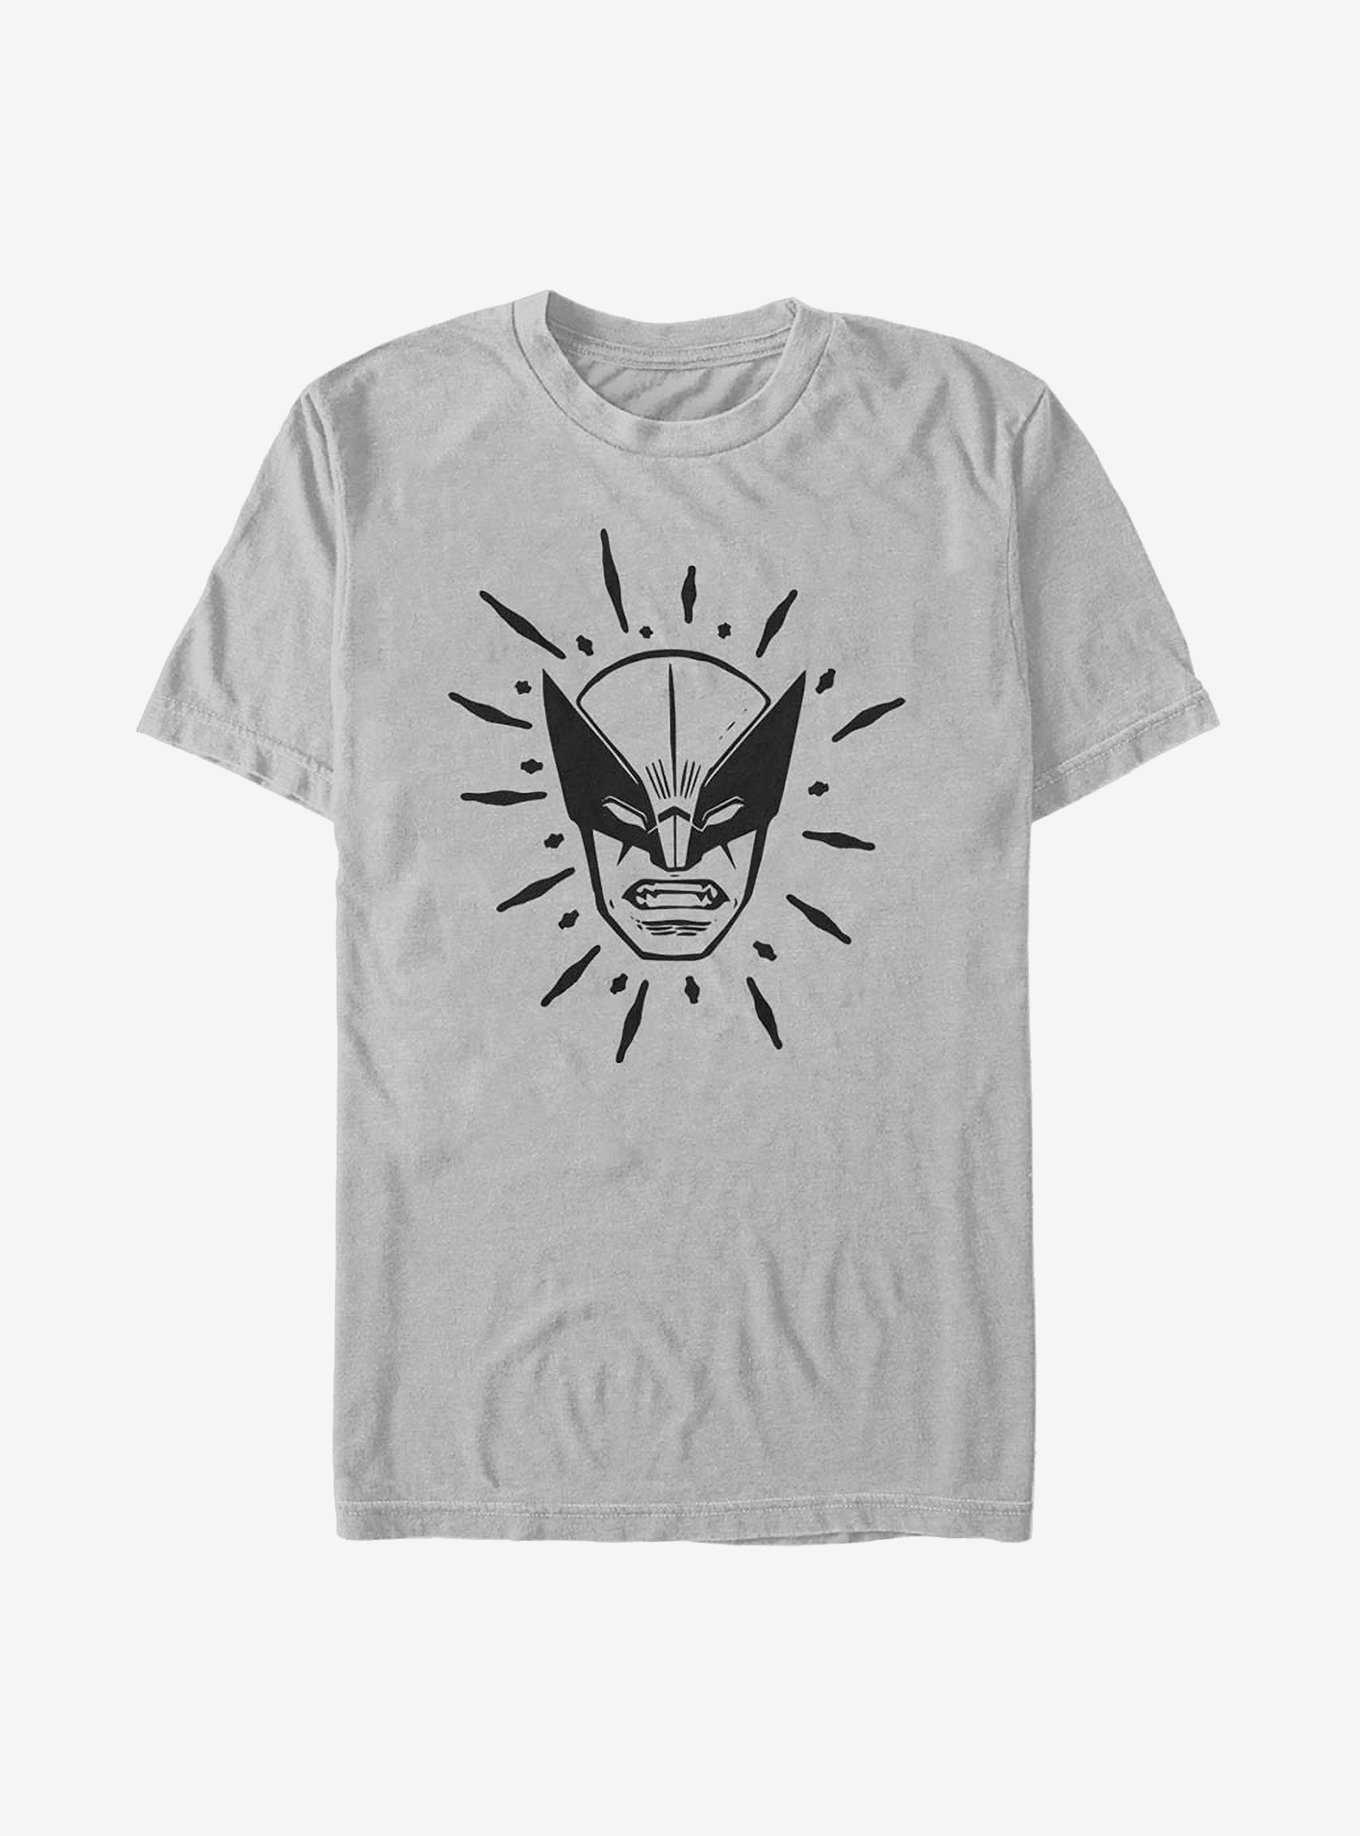 Marvel Wolverine Head T-Shirt, , hi-res